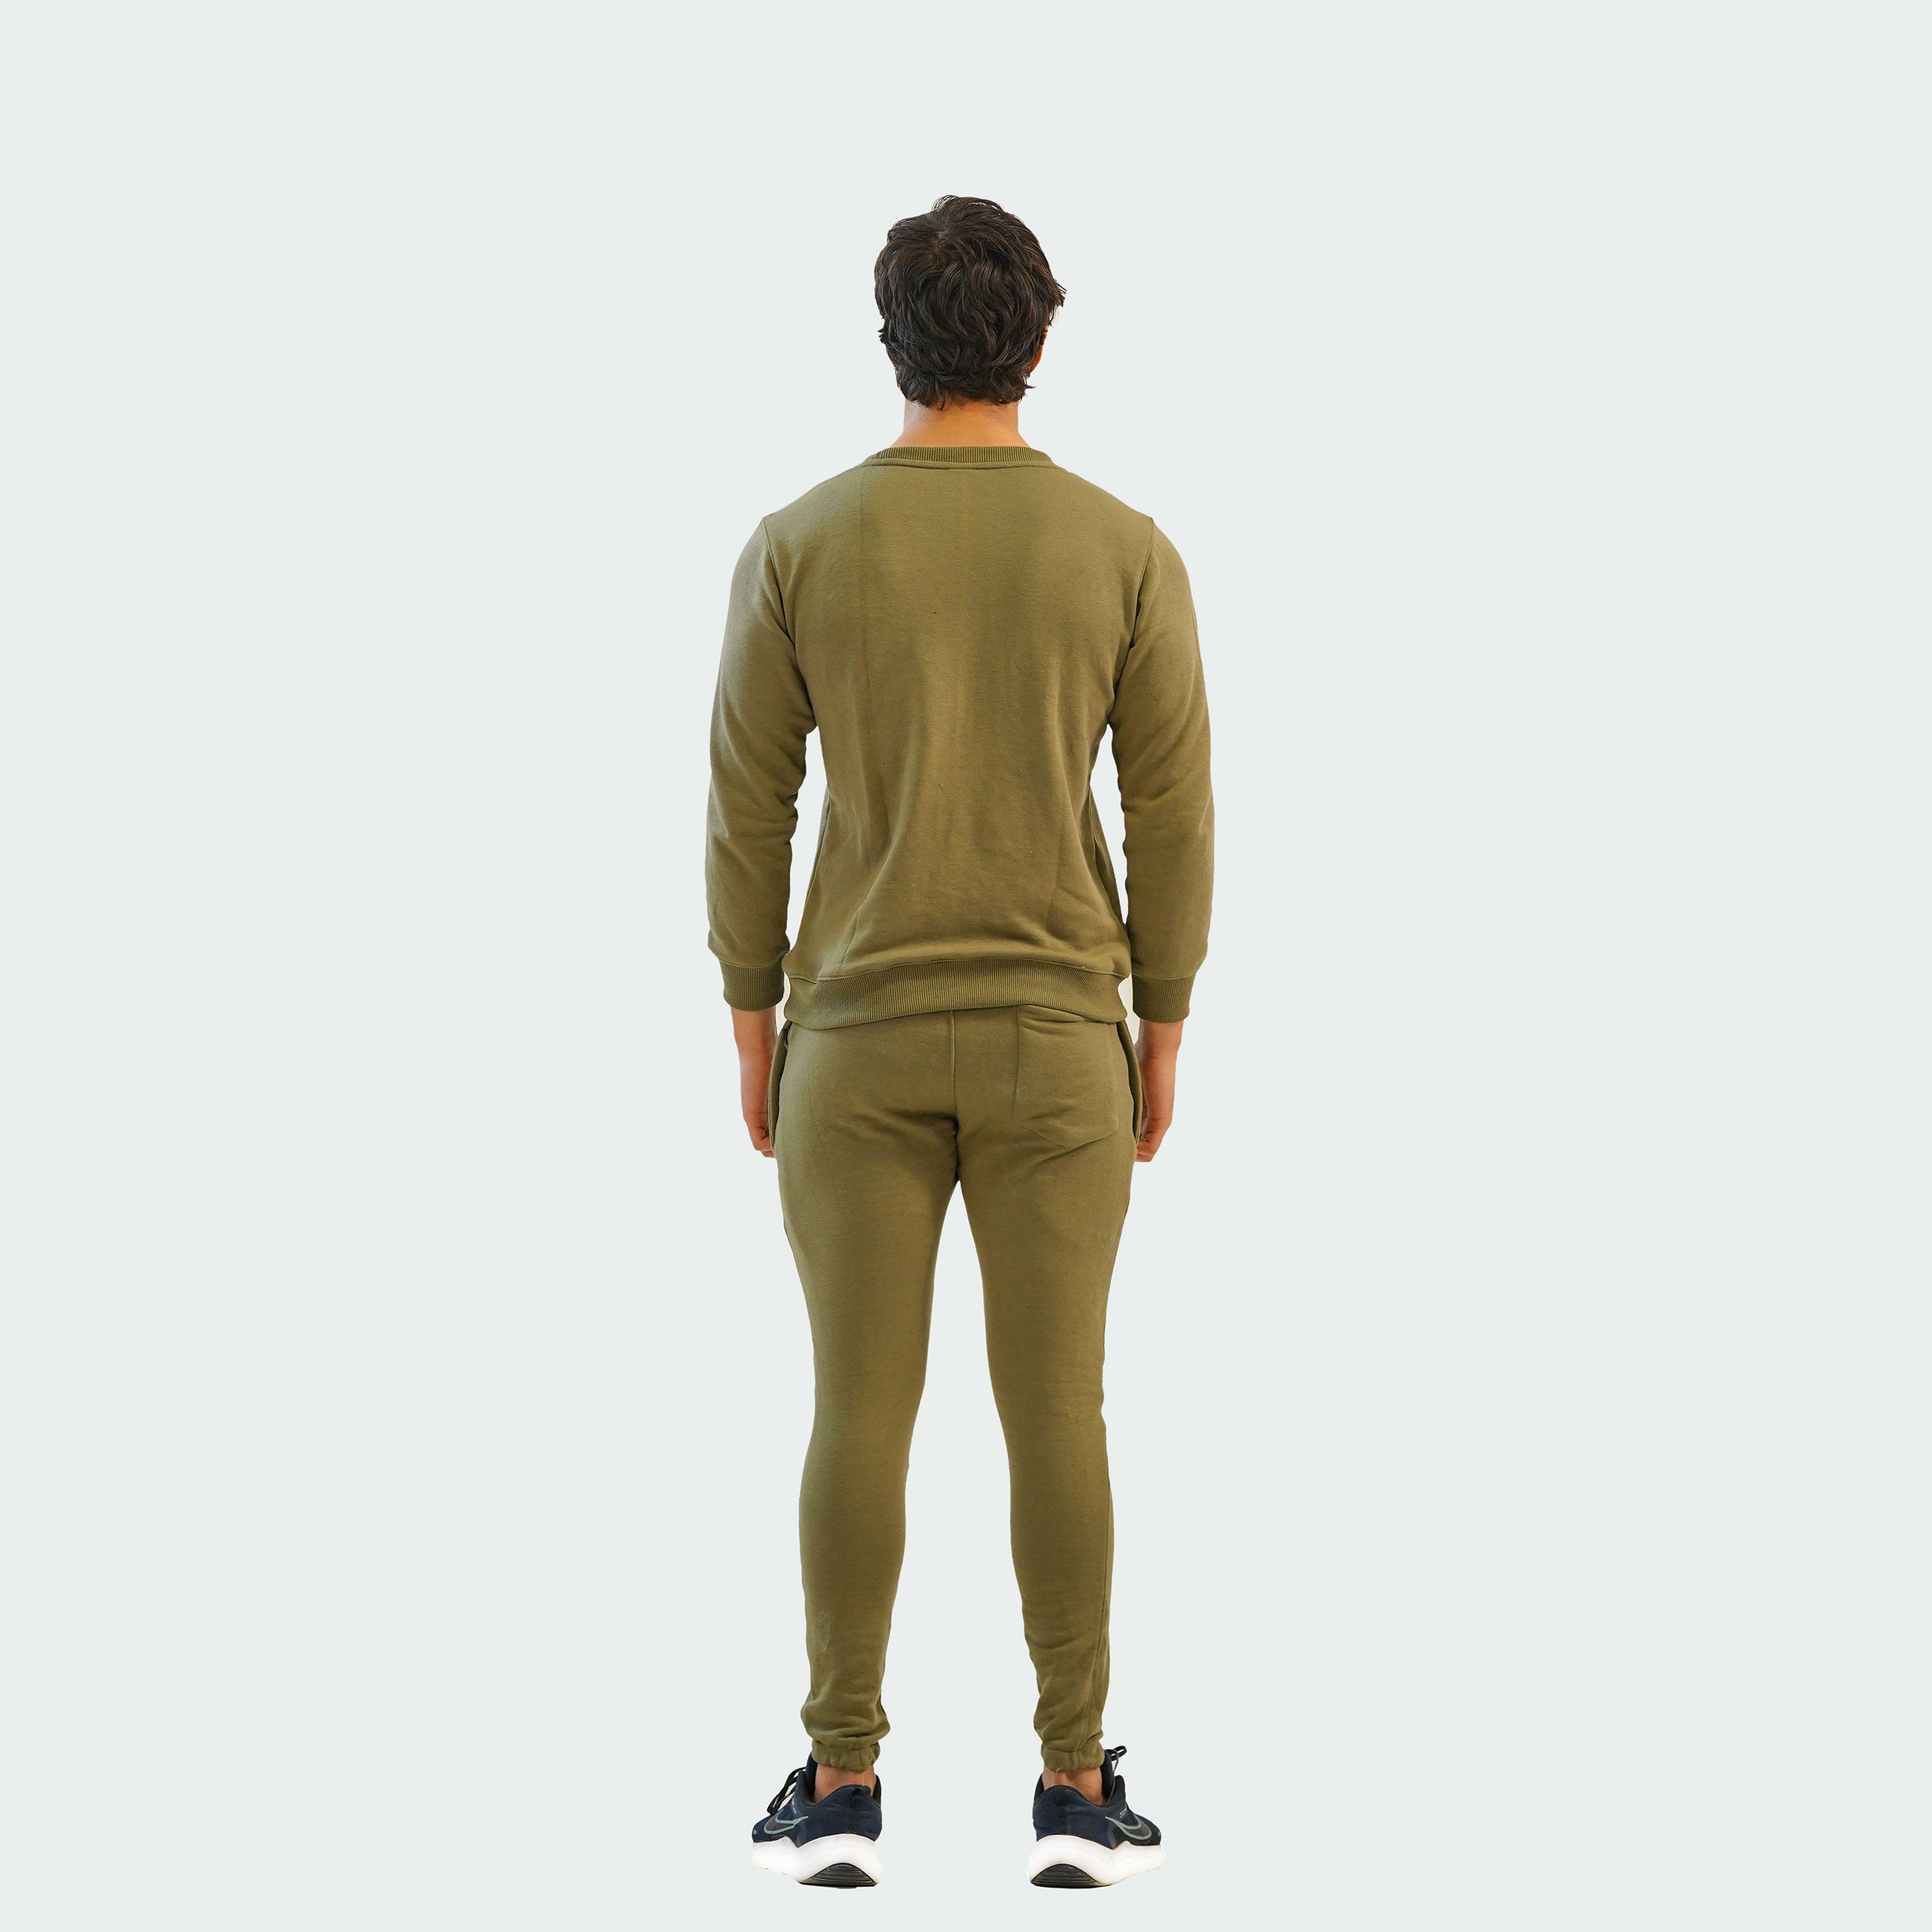 Unisex Athletic Wear- Olive Green